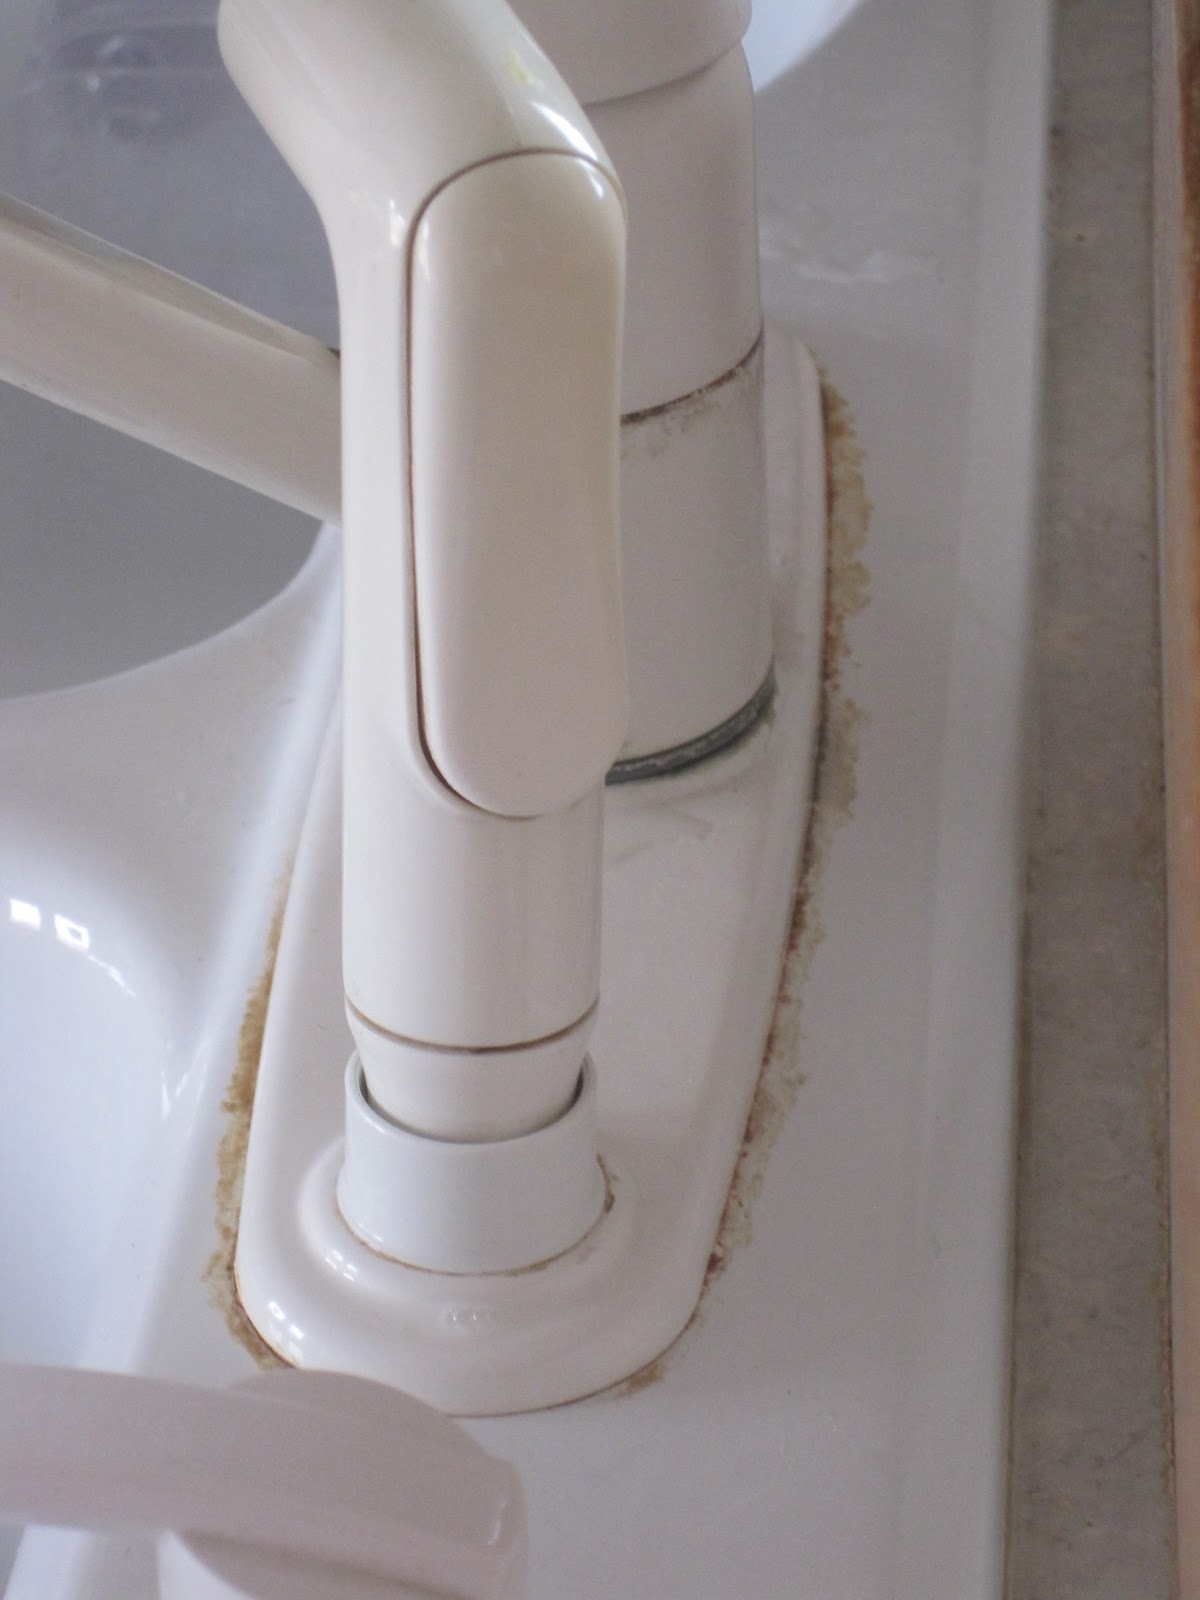 http://decoratedchaos.blogspot.com/2013/04/reviving-old-kitchen-sink-faucet.html